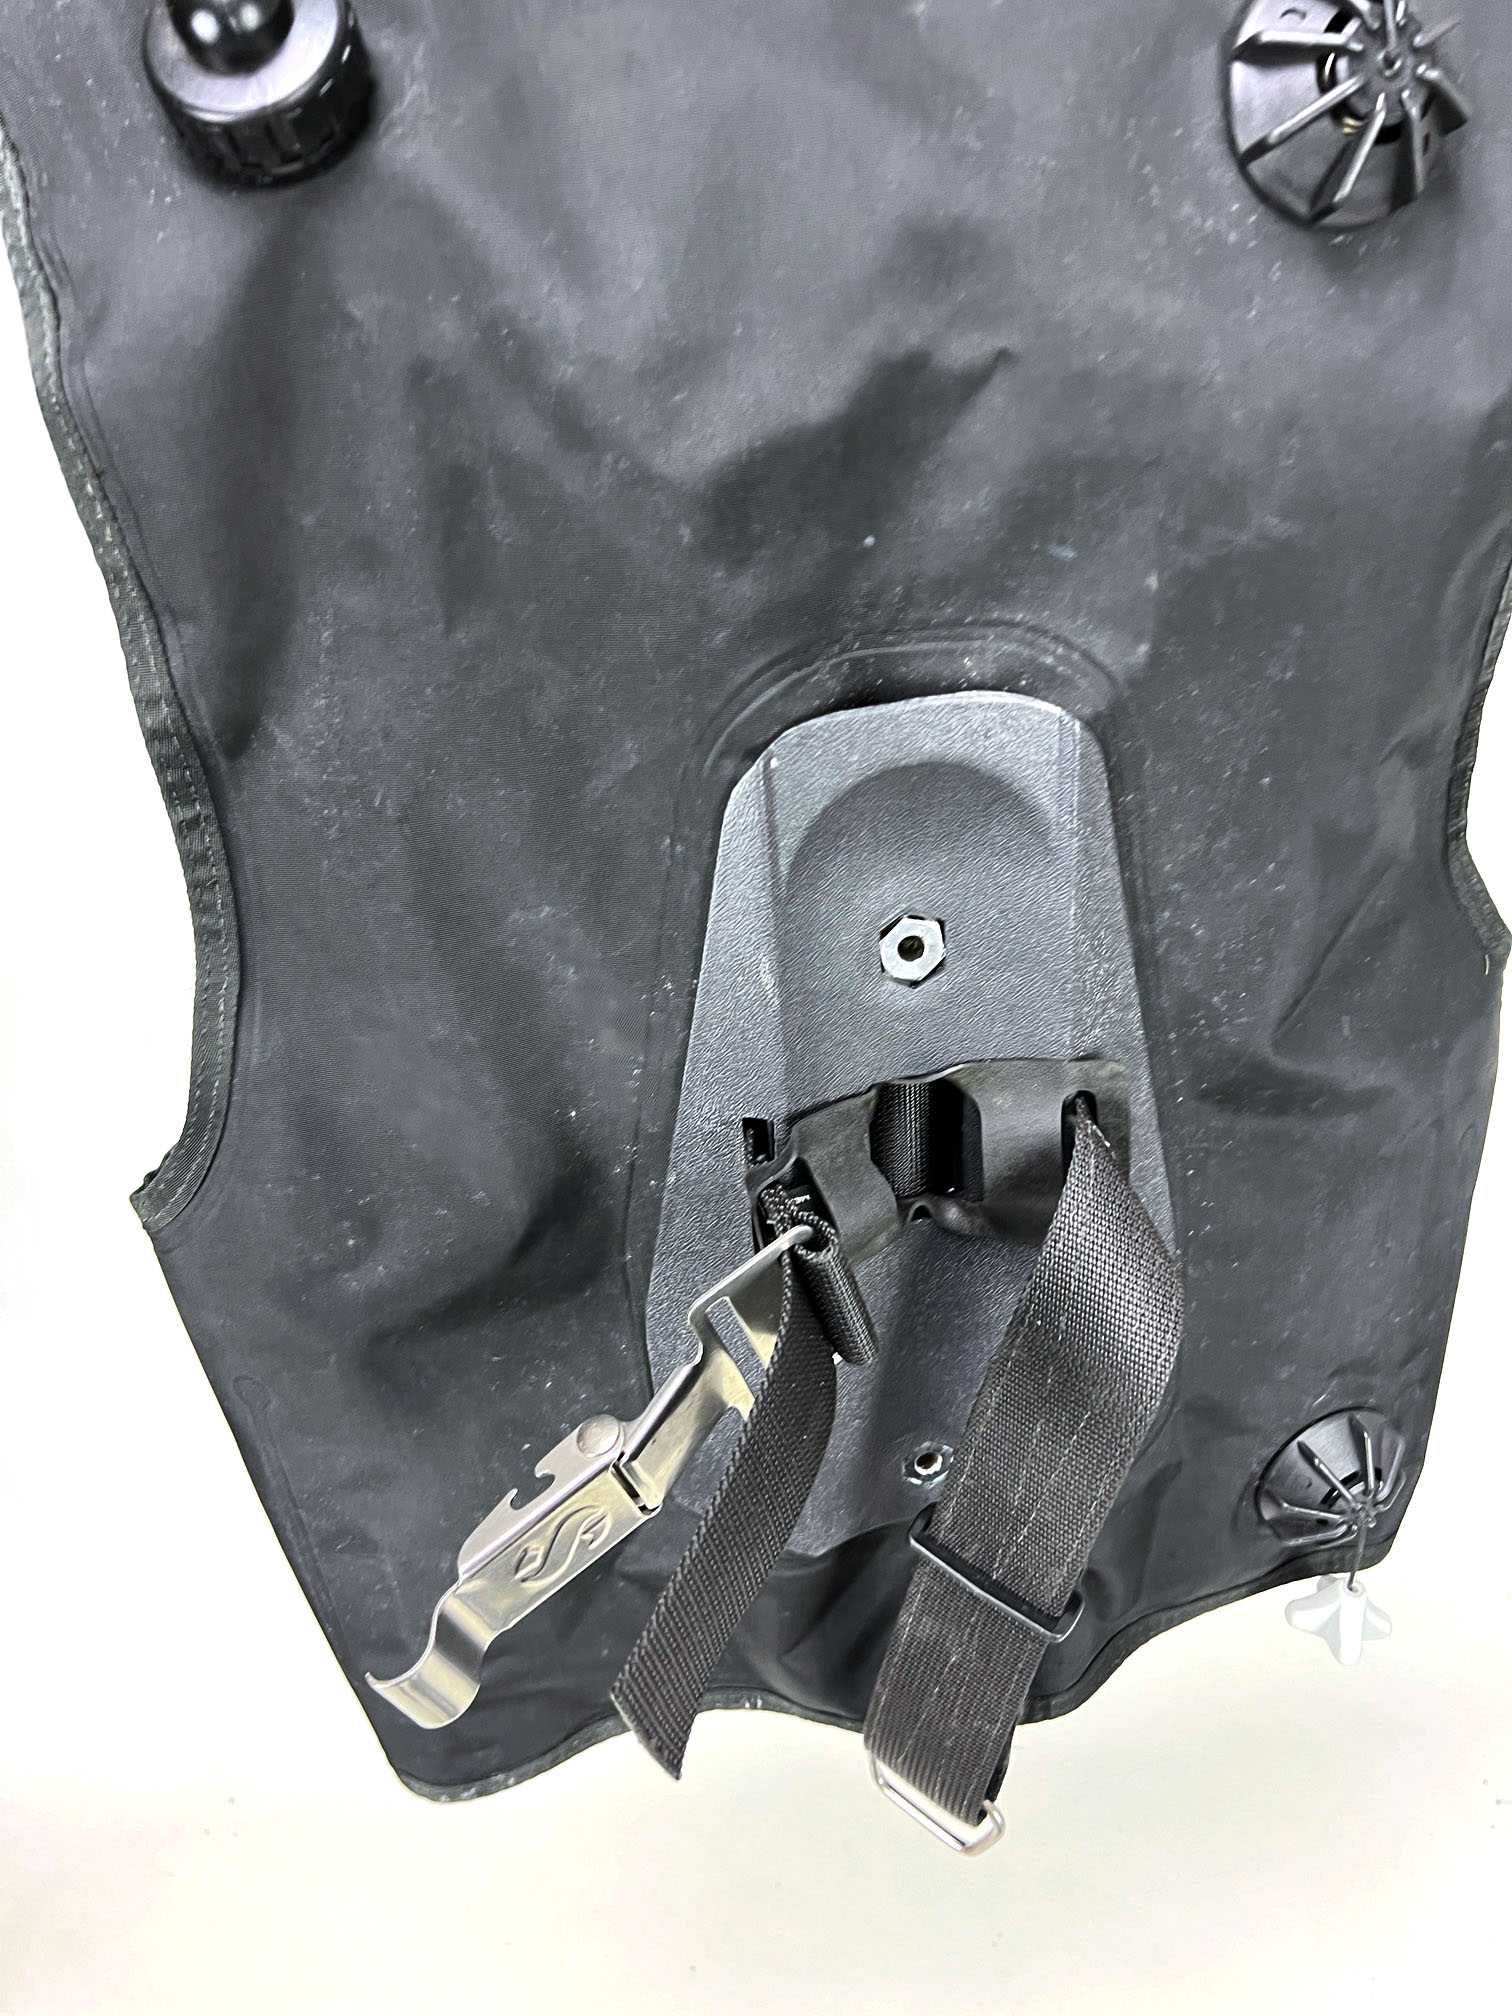 Компенсатор плавучості Scubapro masterjacket diving jacket, Розмір L